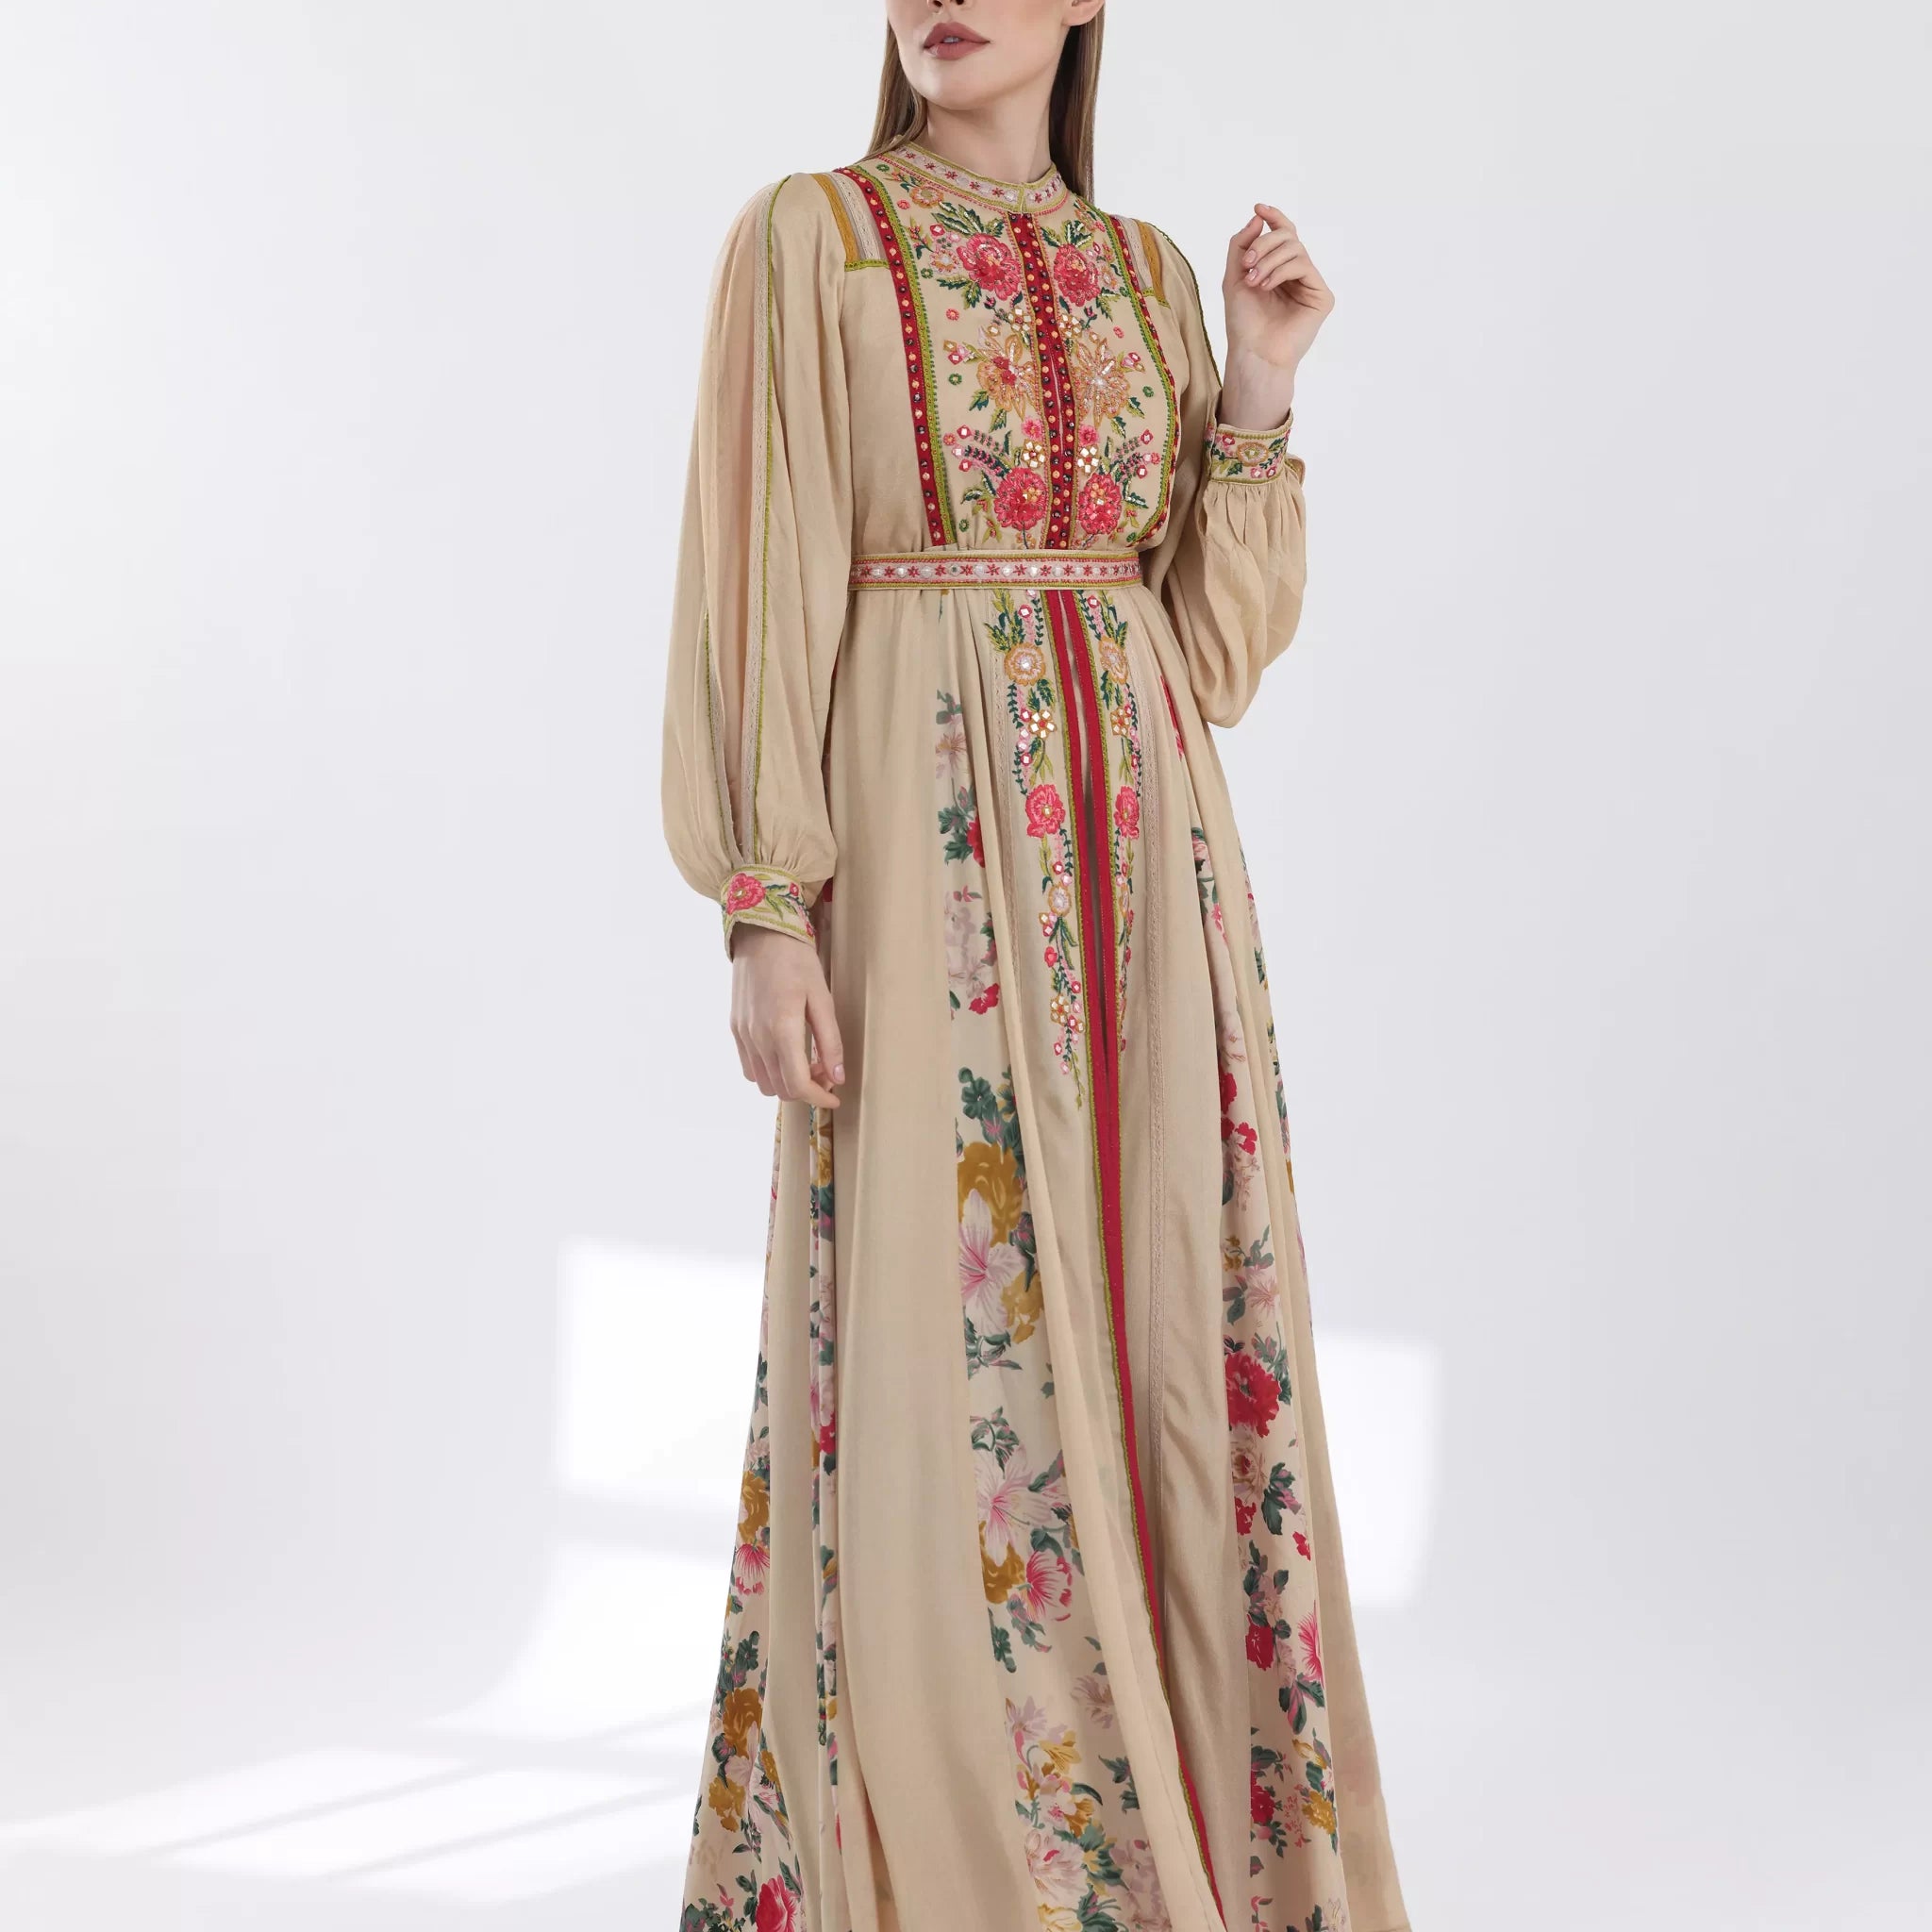 Areem dress